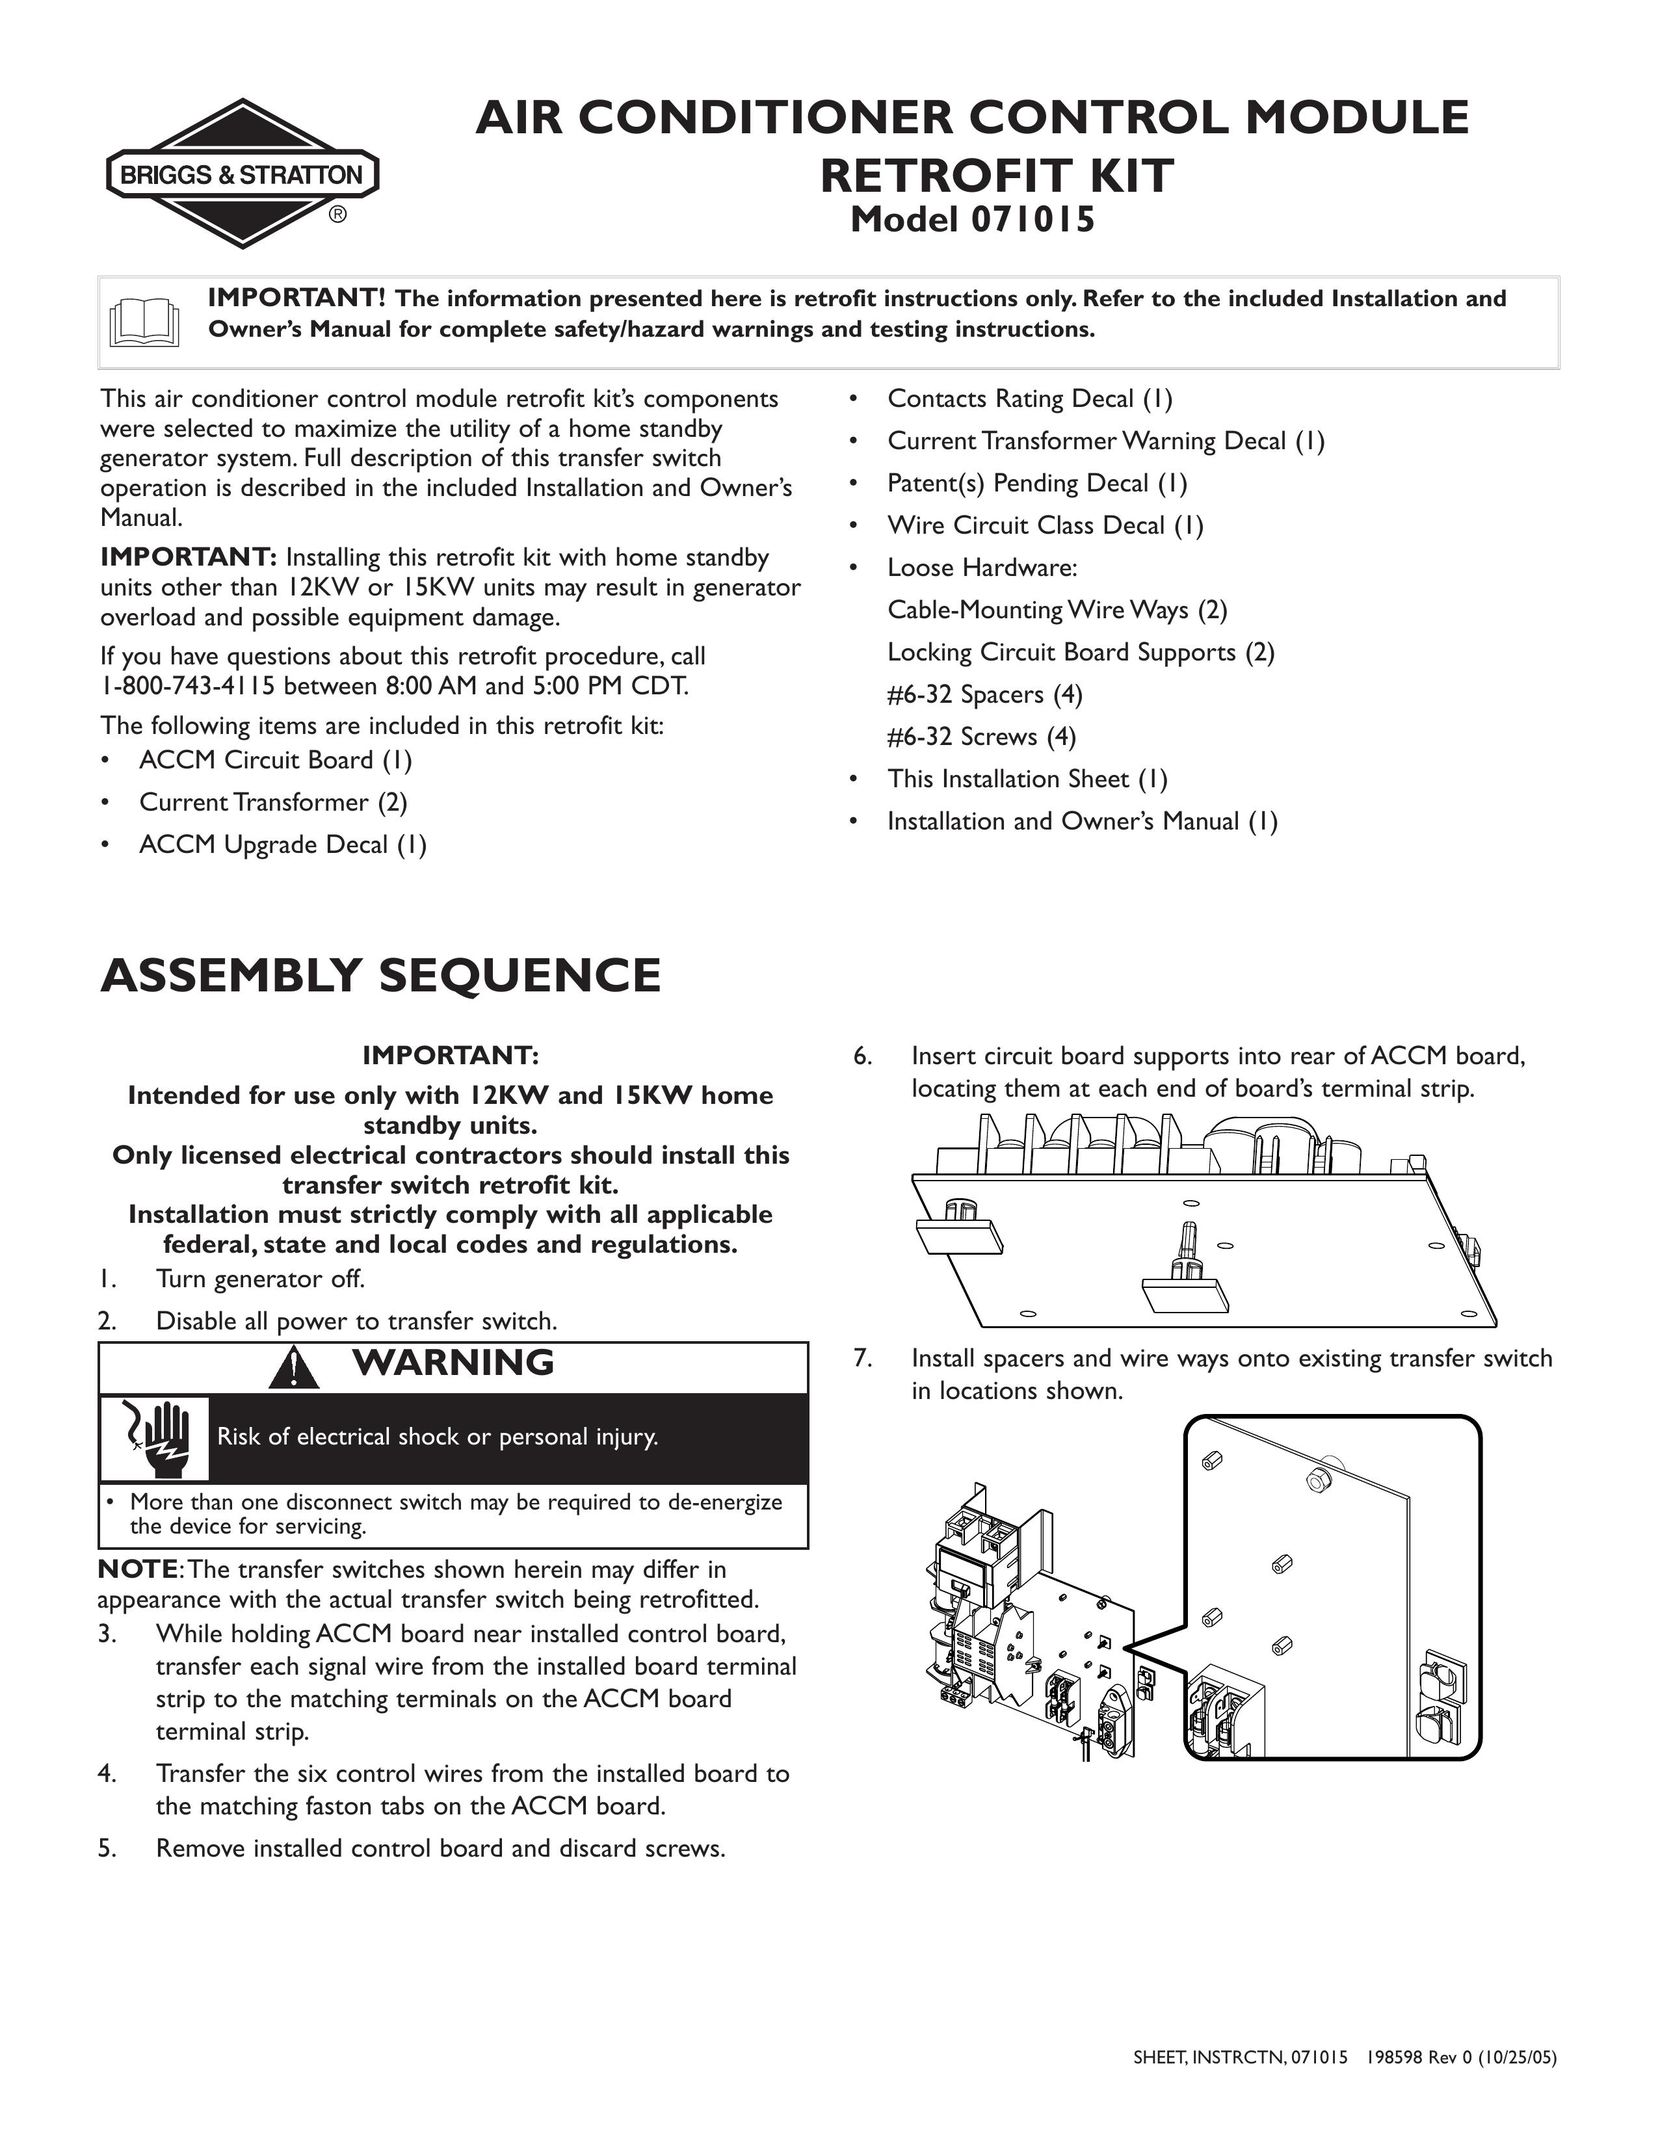 Briggs & Stratton 071015 Air Conditioner User Manual